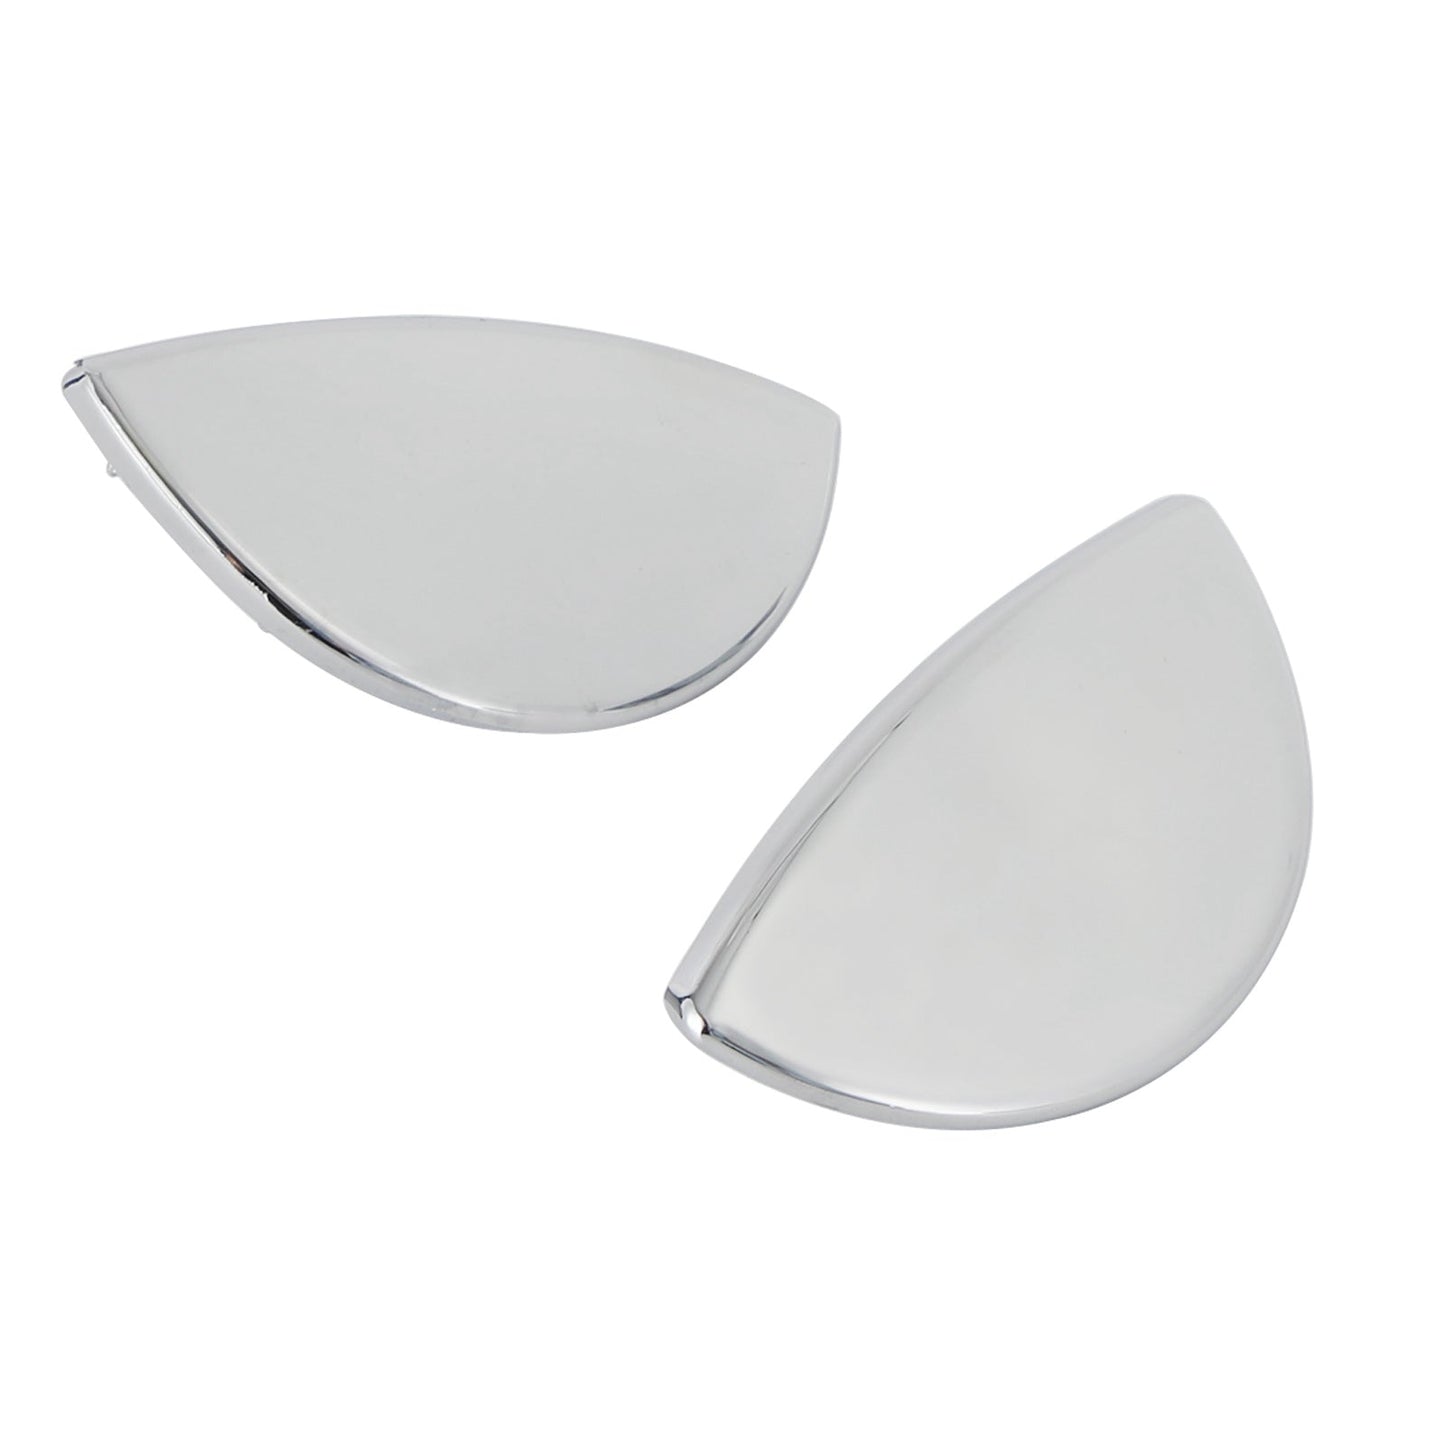 Chrome Left+ Right Headlight Washer Cover 61672752559/60 For Mini Cooper 08-2014